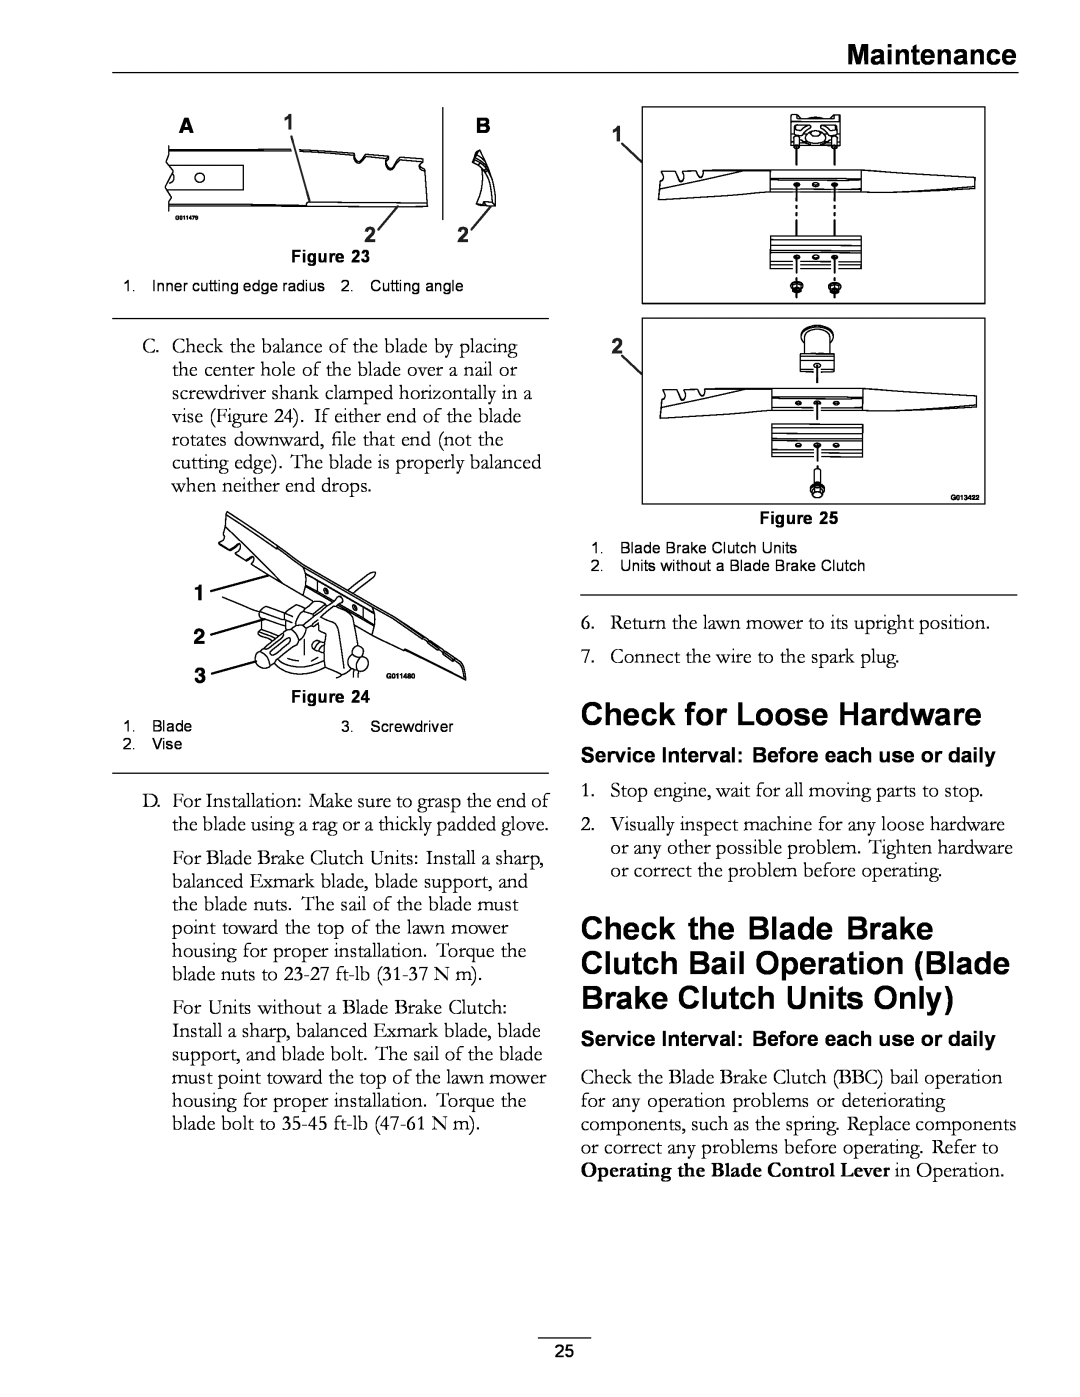 Exmark 4500-686 Rev. B manual Check for Loose Hardware, Check the Blade Brake Clutch Bail Operation Blade, Maintenance 